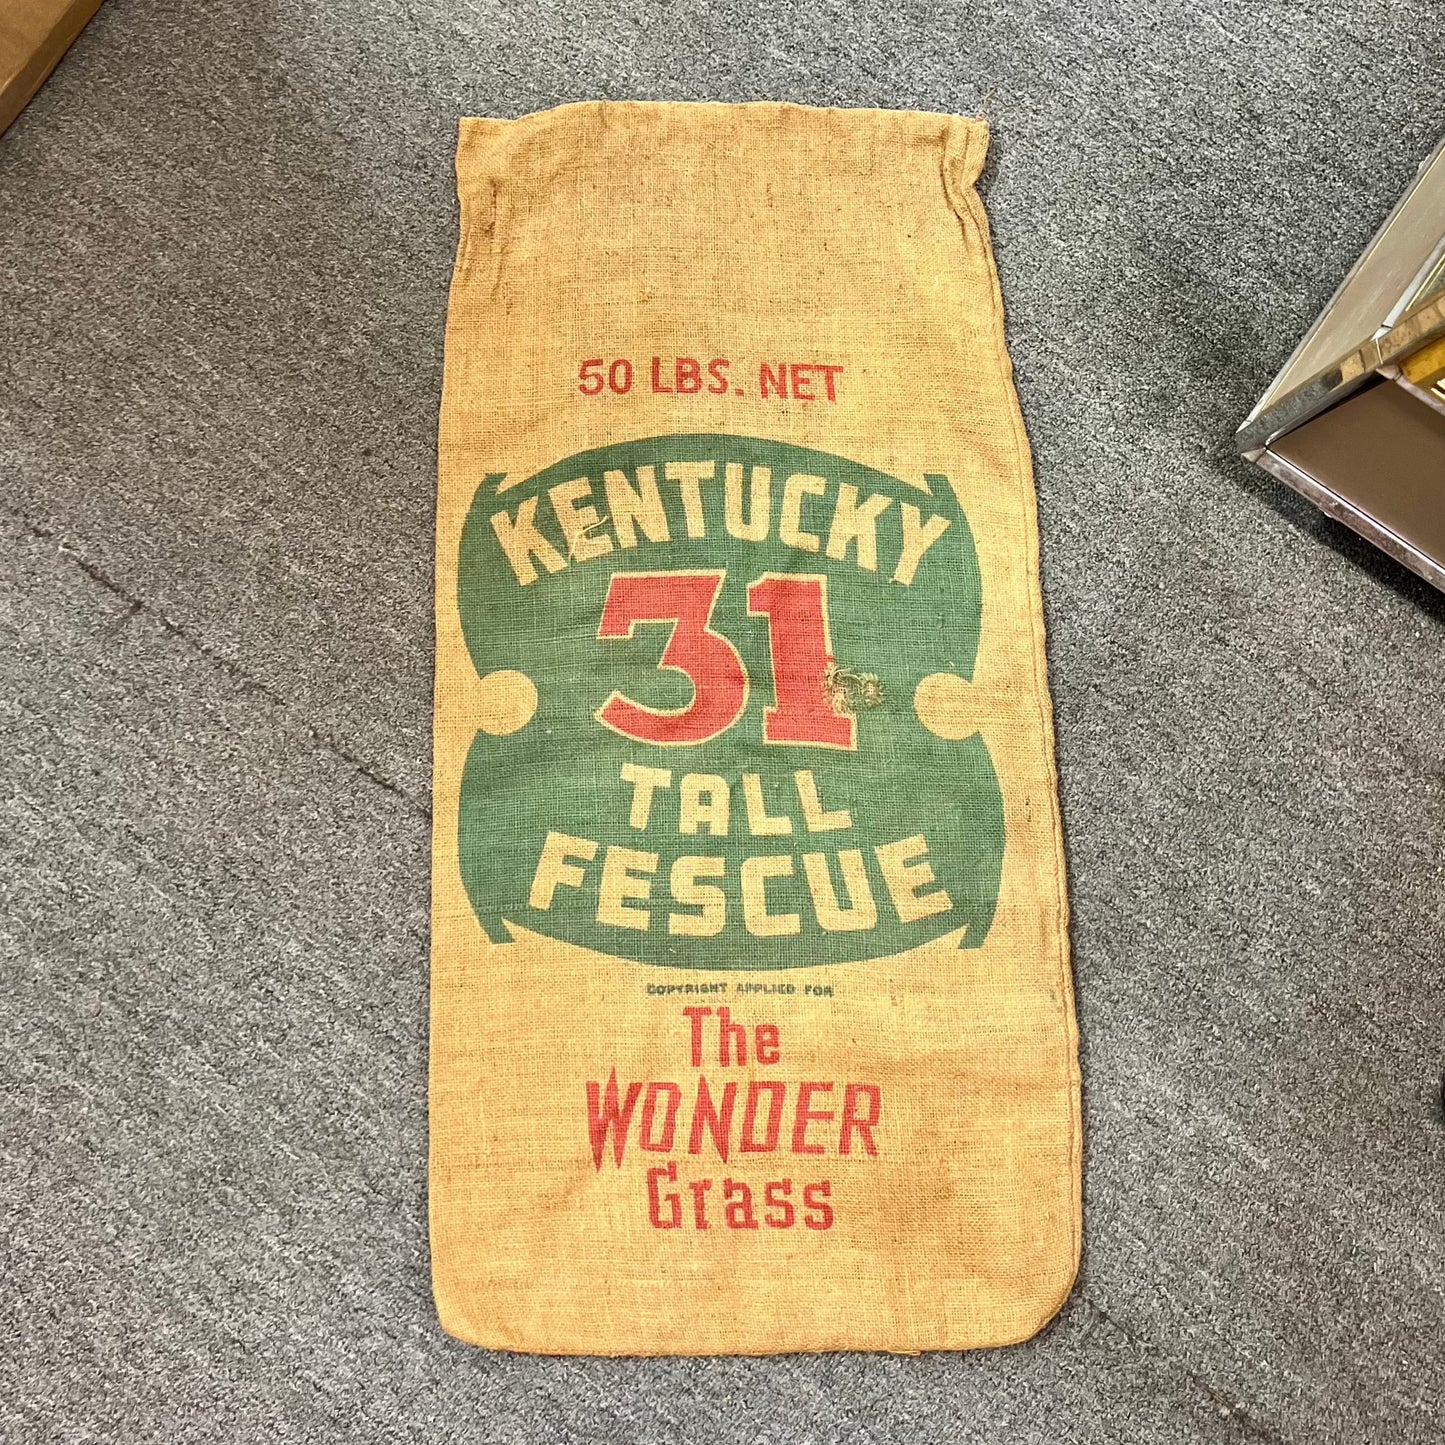 Kentucky 31 Tall Fescue 50 lbs Feed Sack